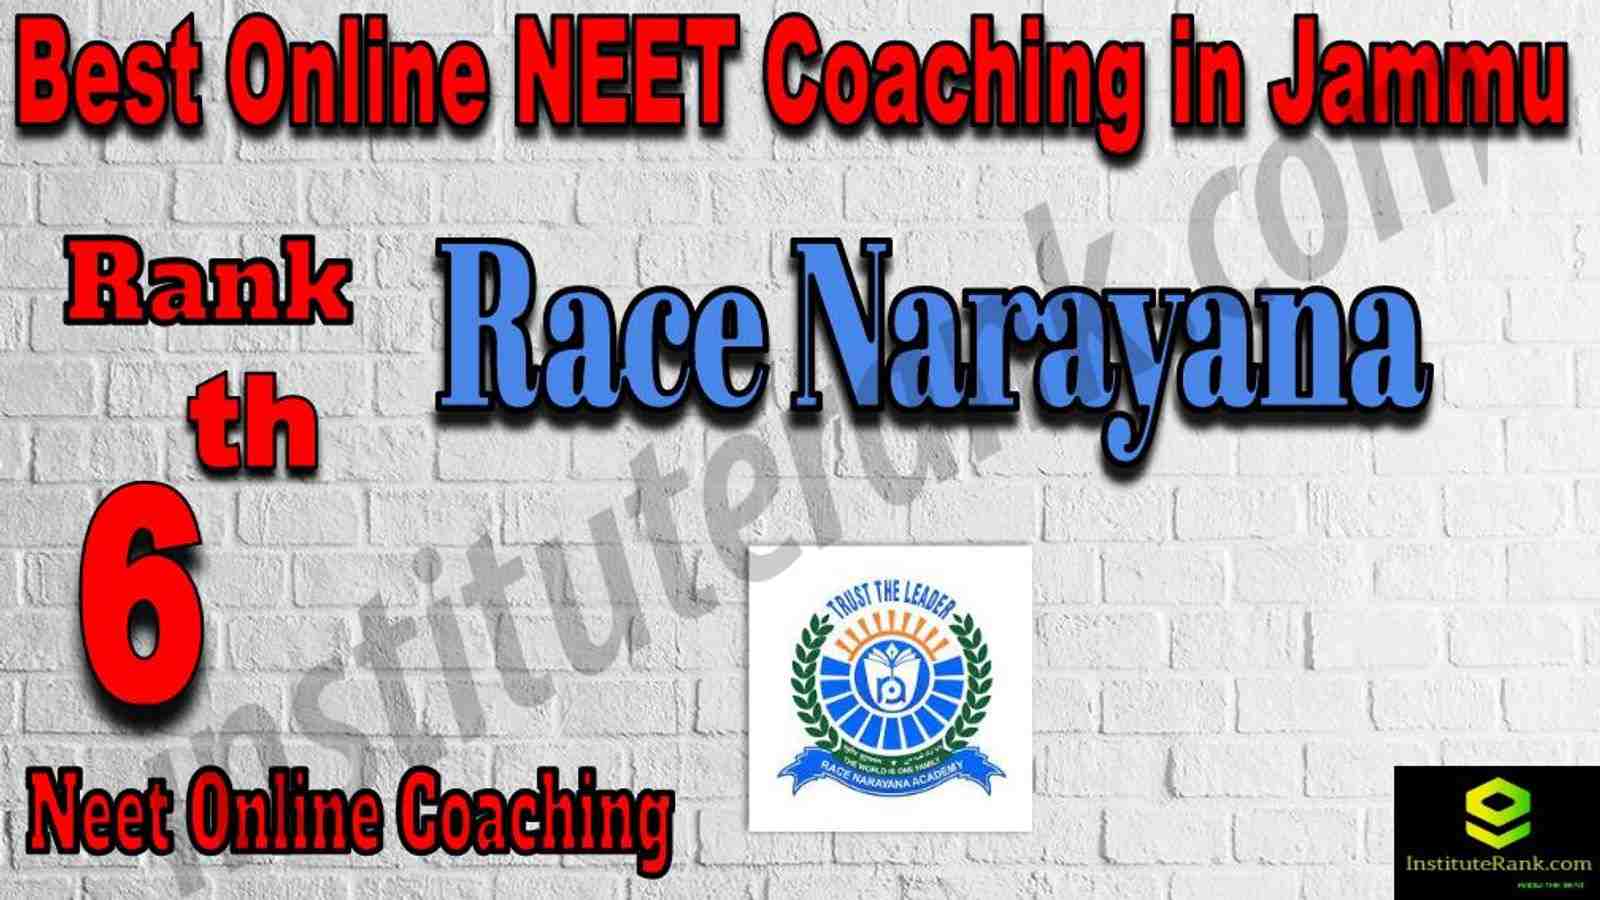 6th Best Online Neet Coaching in Jammu